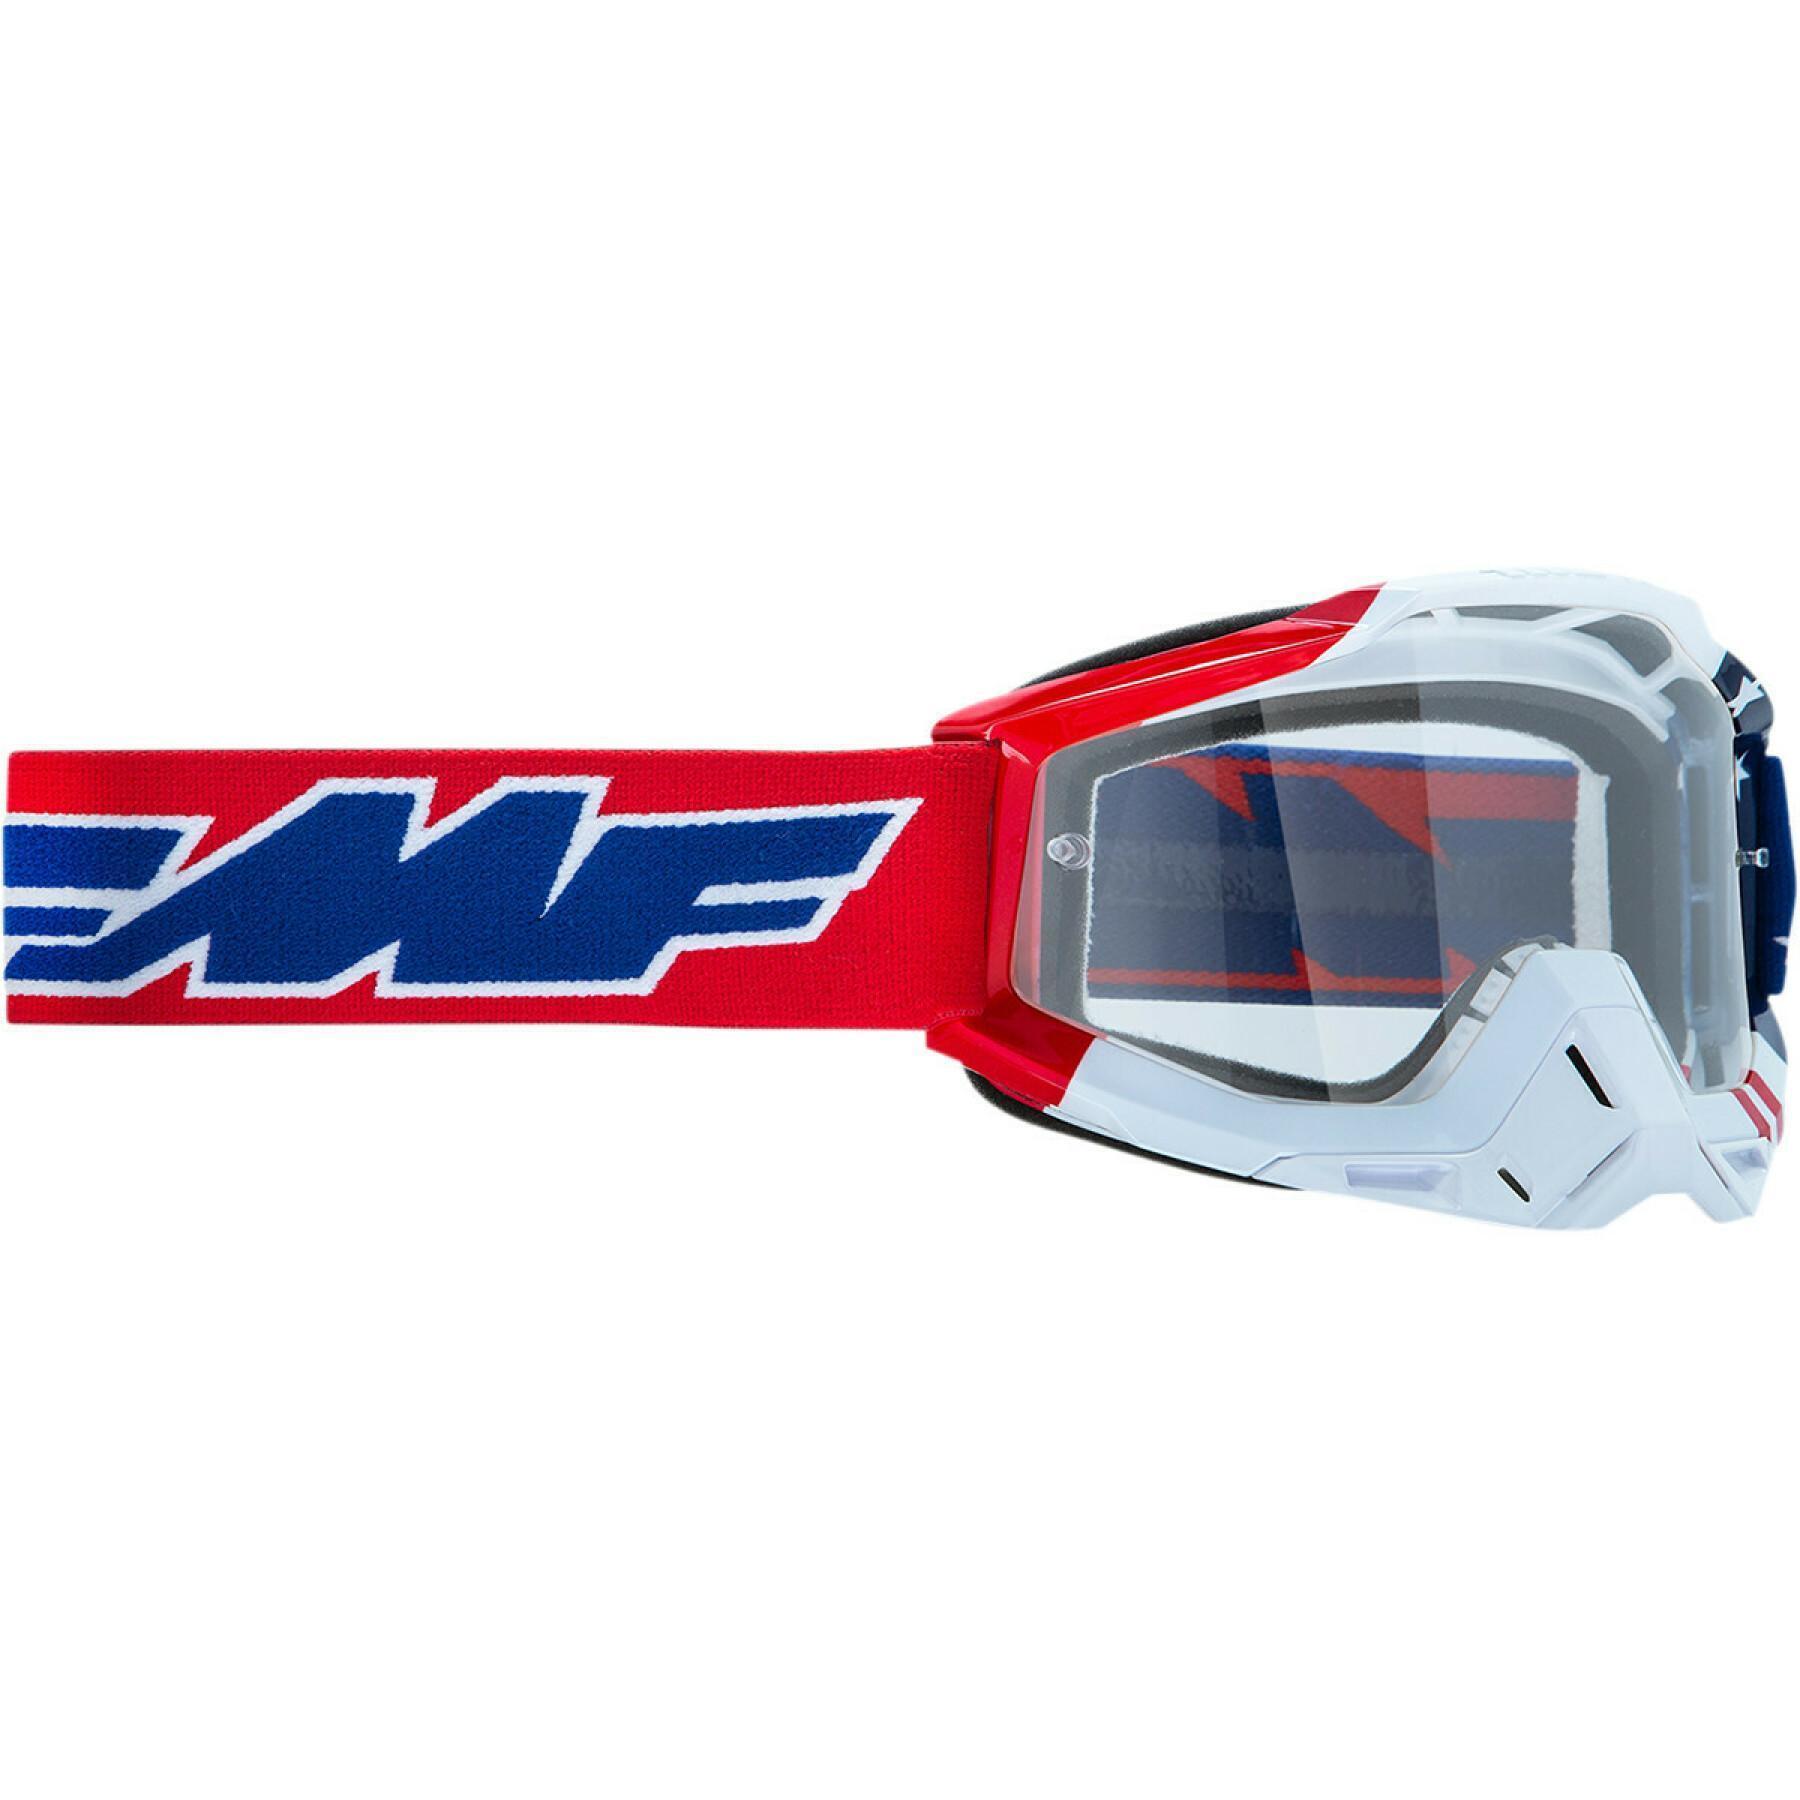 Motorfiets crossbril FMF Vision us of a clr